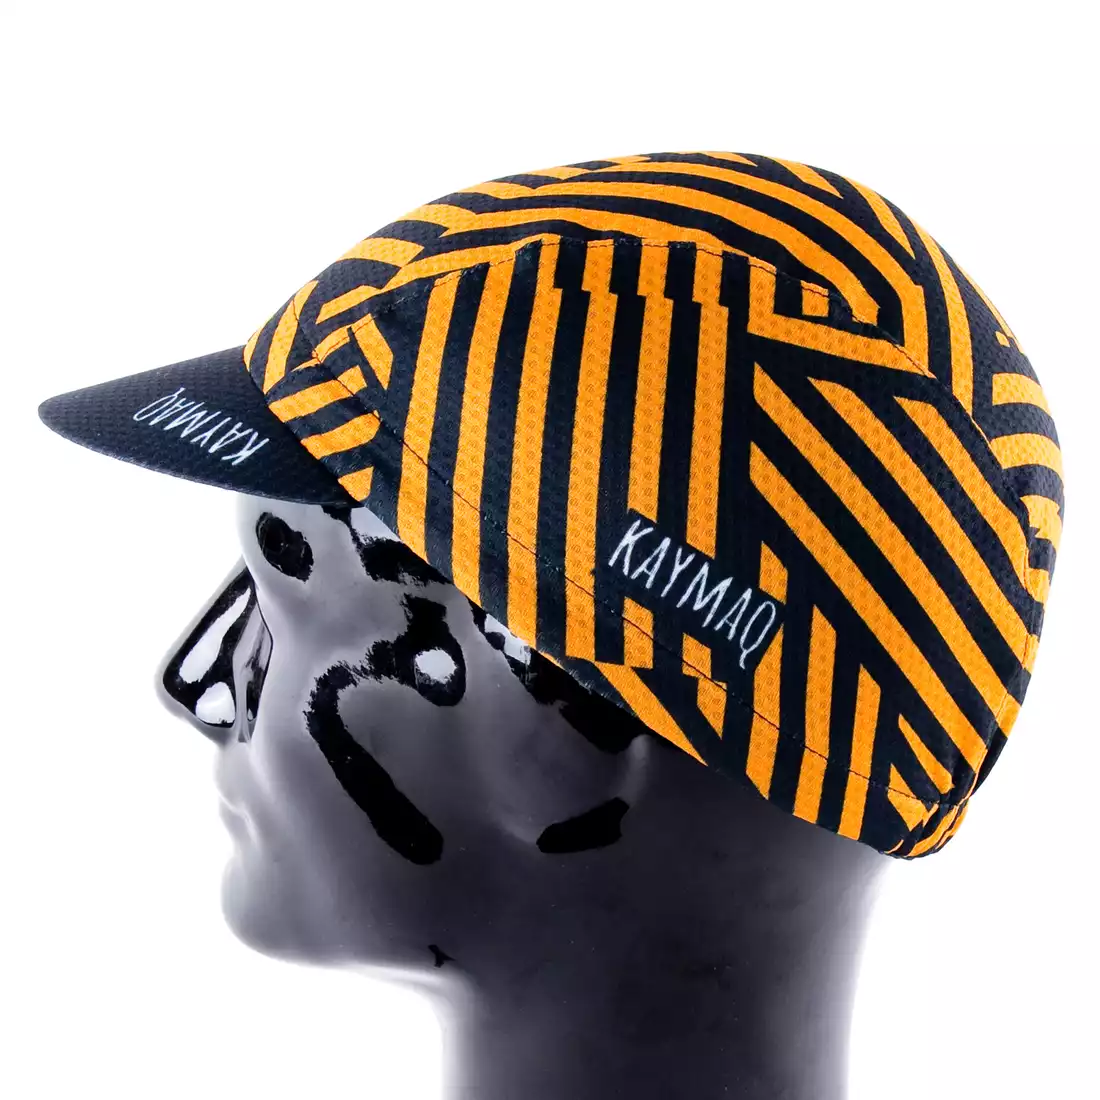 KAYMAQ DESIGN CZK1-6 STRIPES Cycling cap with a visor, orange